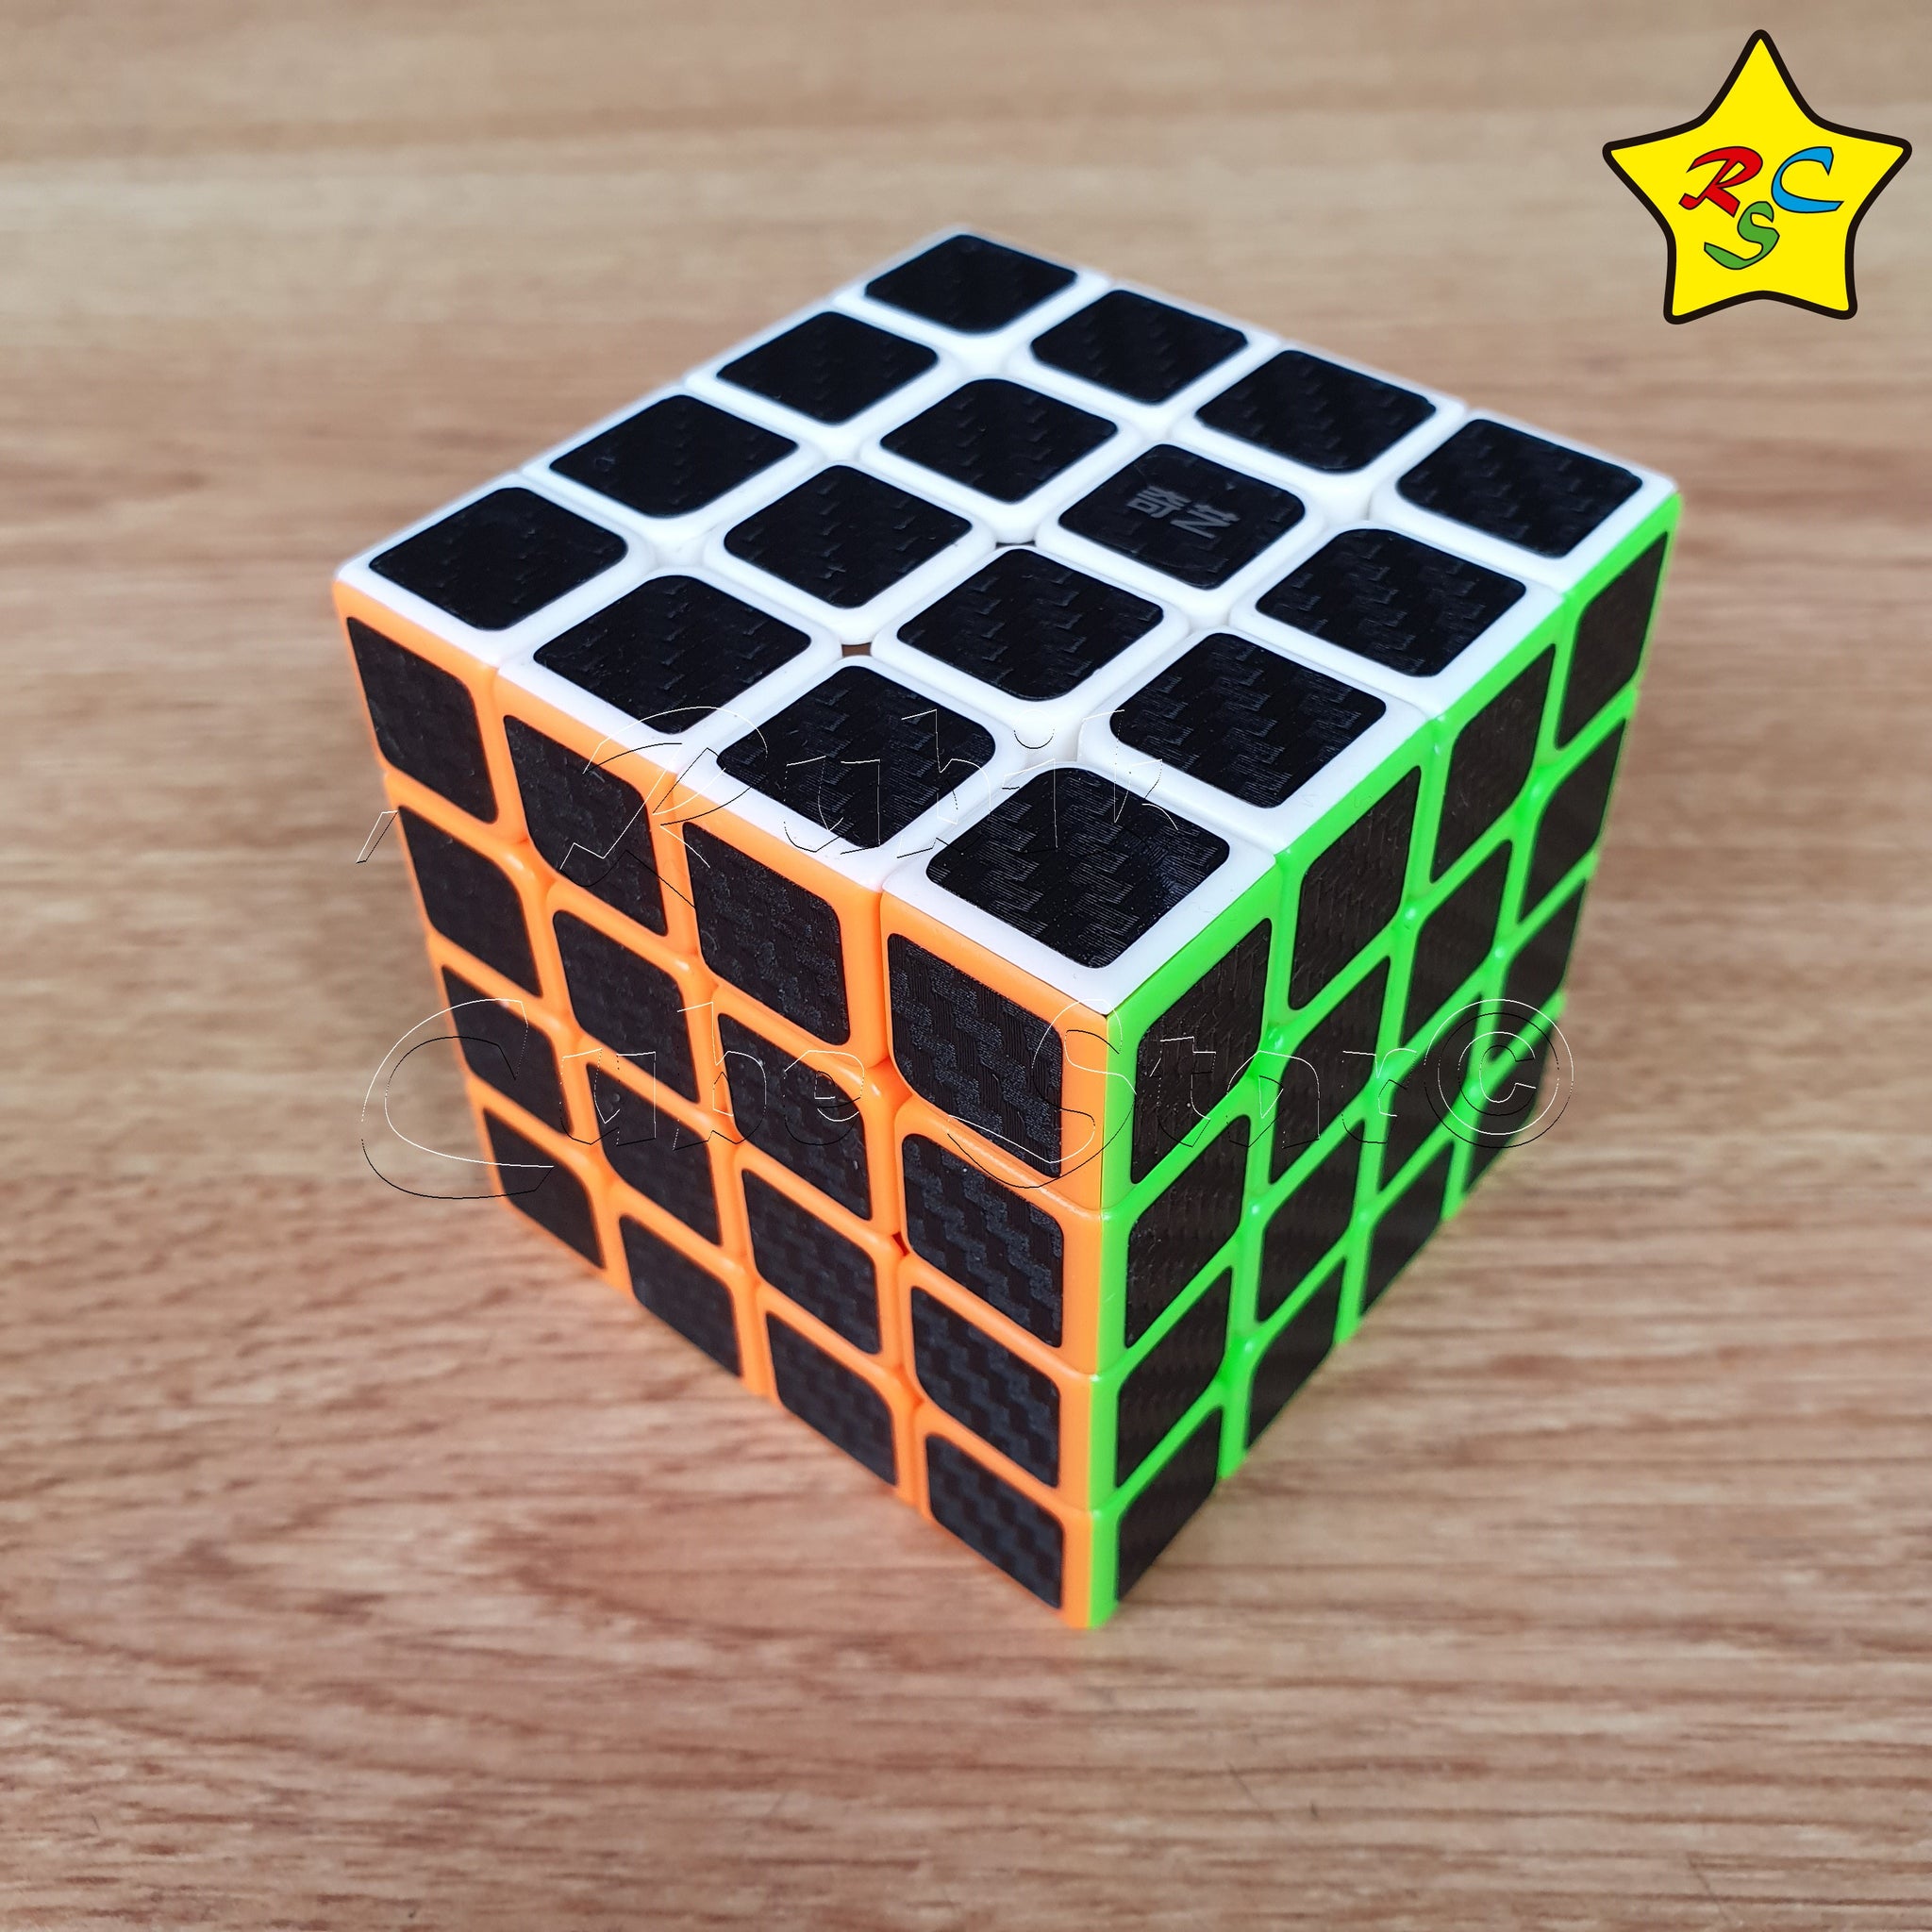 CuberSpeed QiYi Qiyuan S 4x4 Cubo mágico brilhante sem adesivo